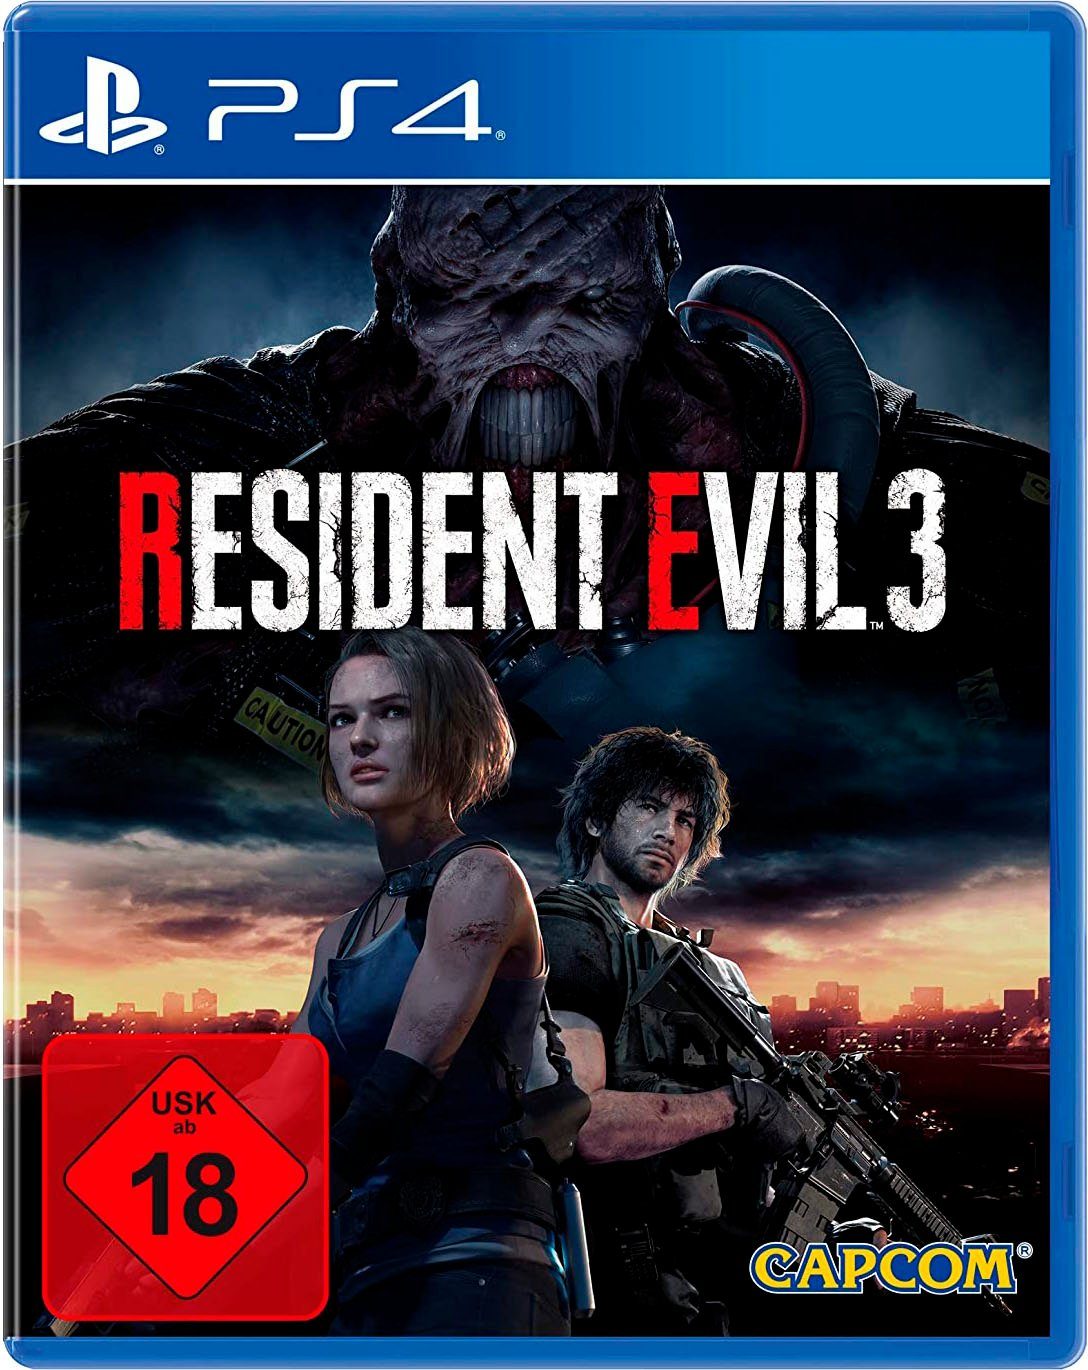 PlayStation 3 Evil PS4 Resident Capcom 4